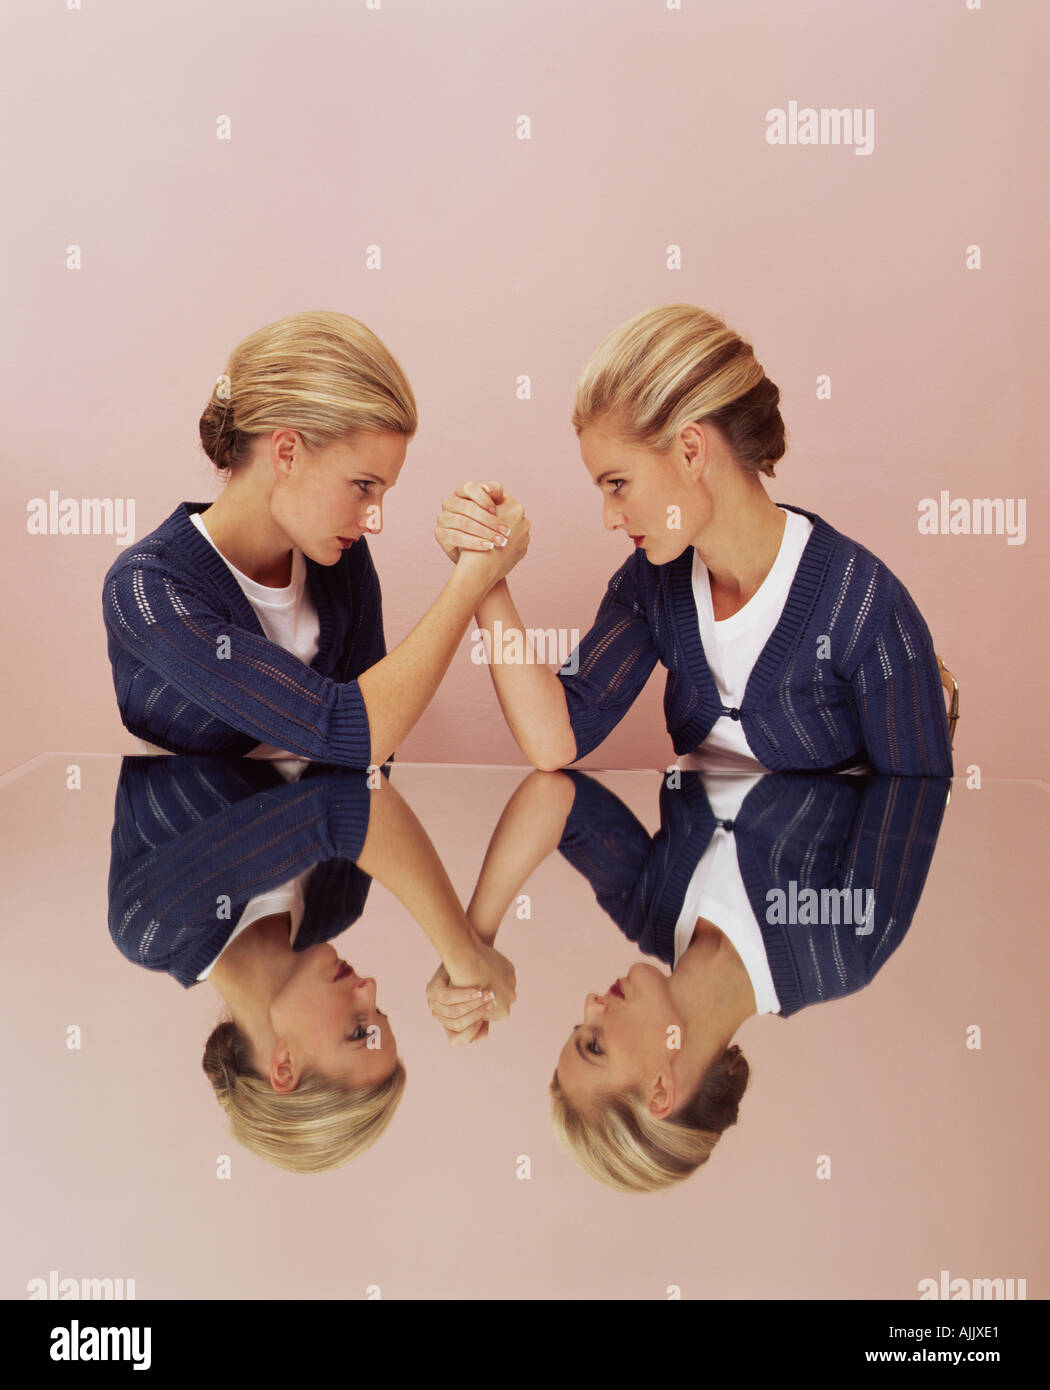 Two women arm wrestling Stock Photo